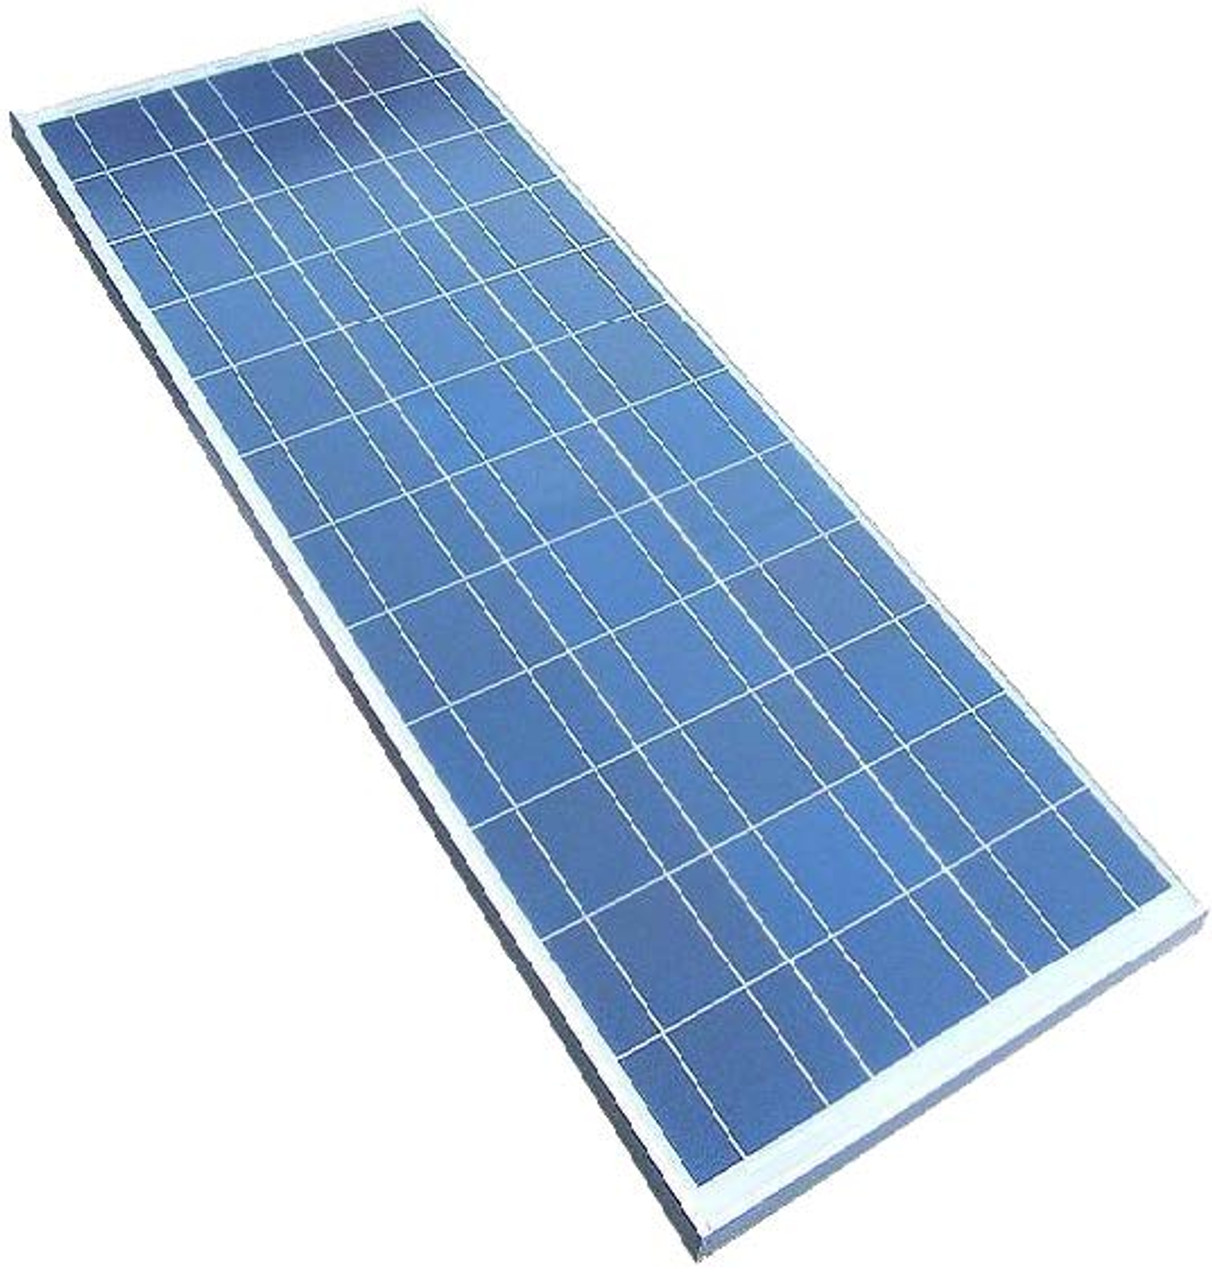 Photo Solar panel features